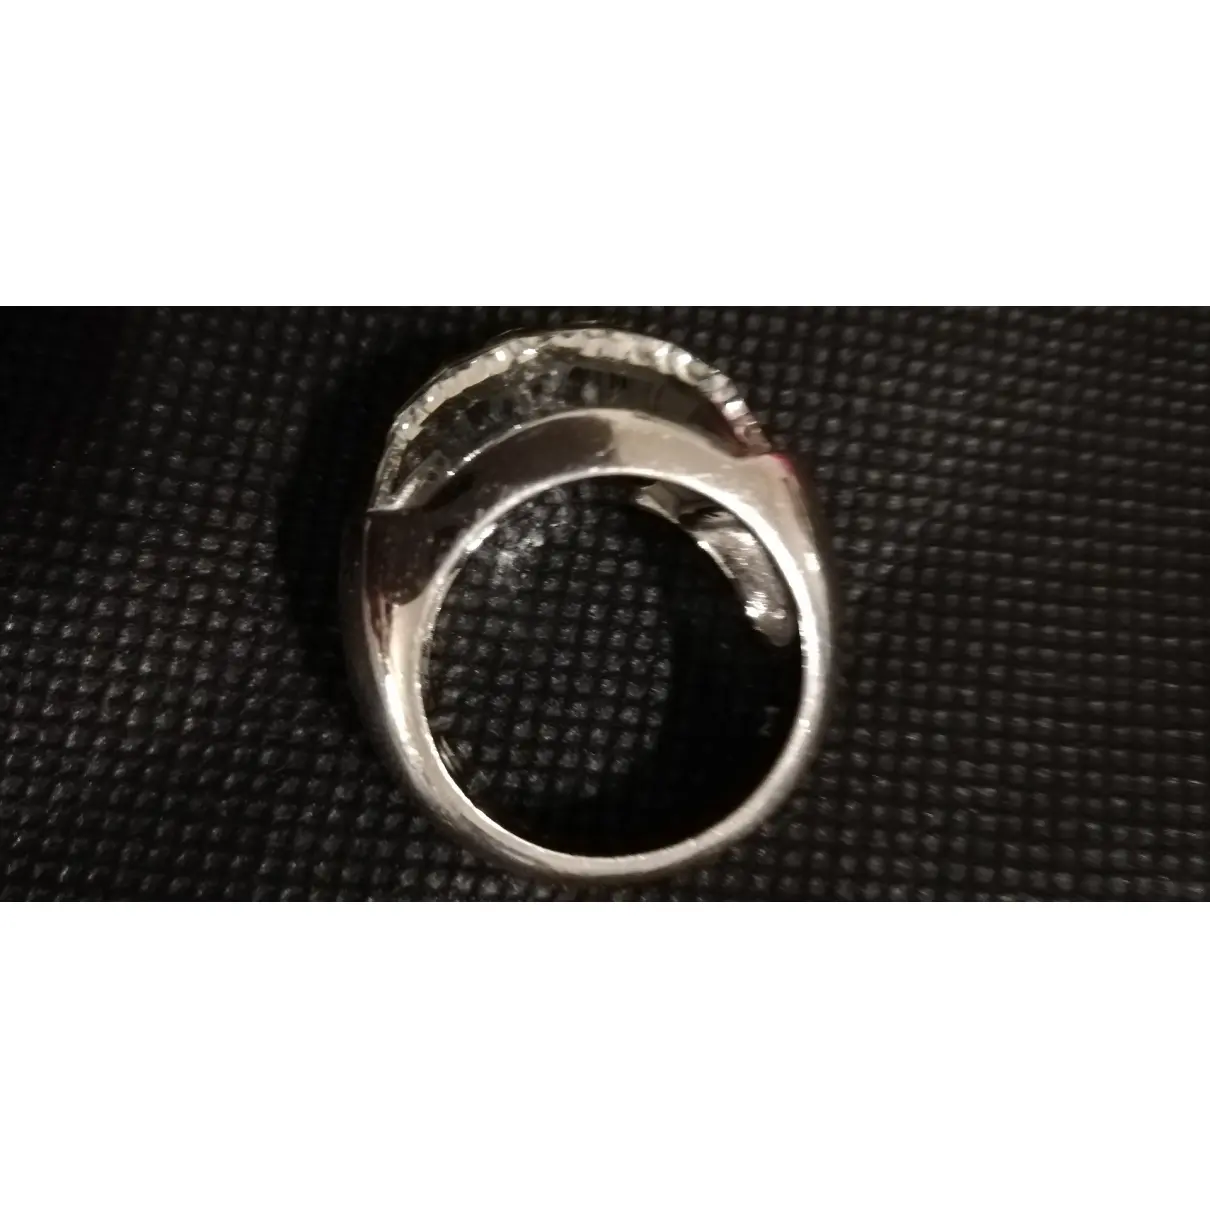 Swarovski Nirvana silver gilt ring for sale